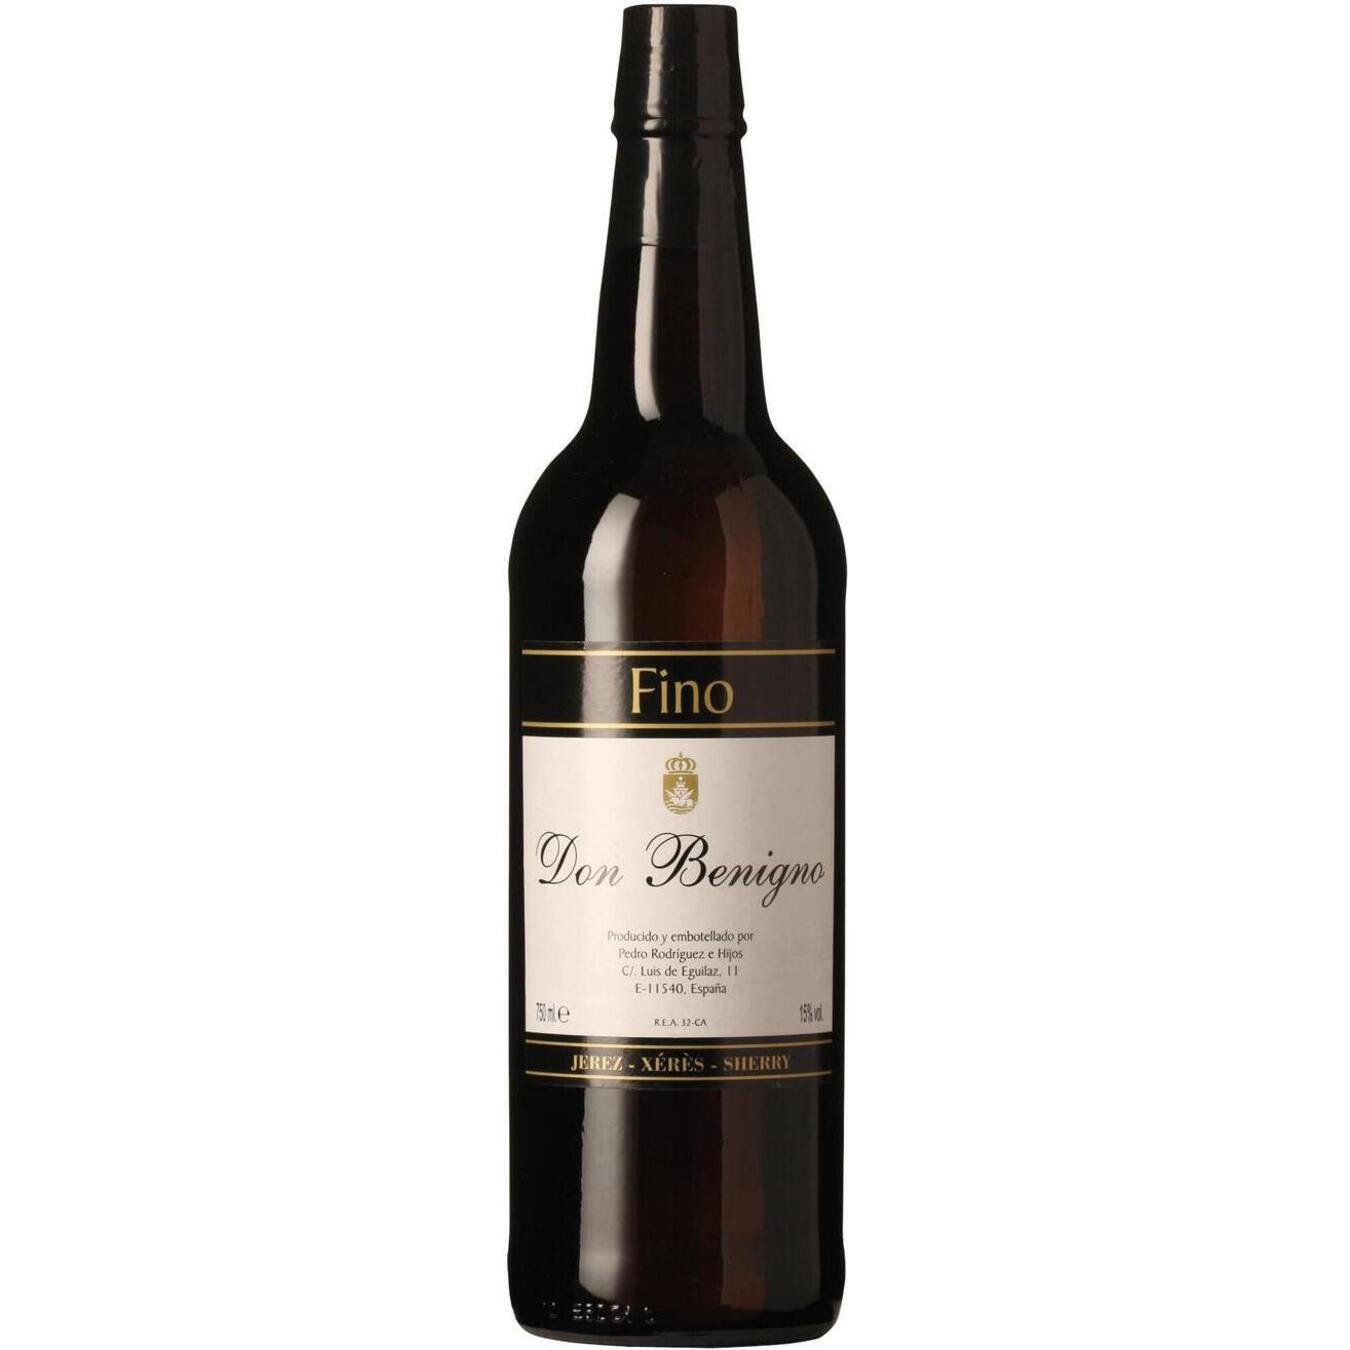 Don Benigno Fino Sherry Jerez White Dry Wine 0,75l